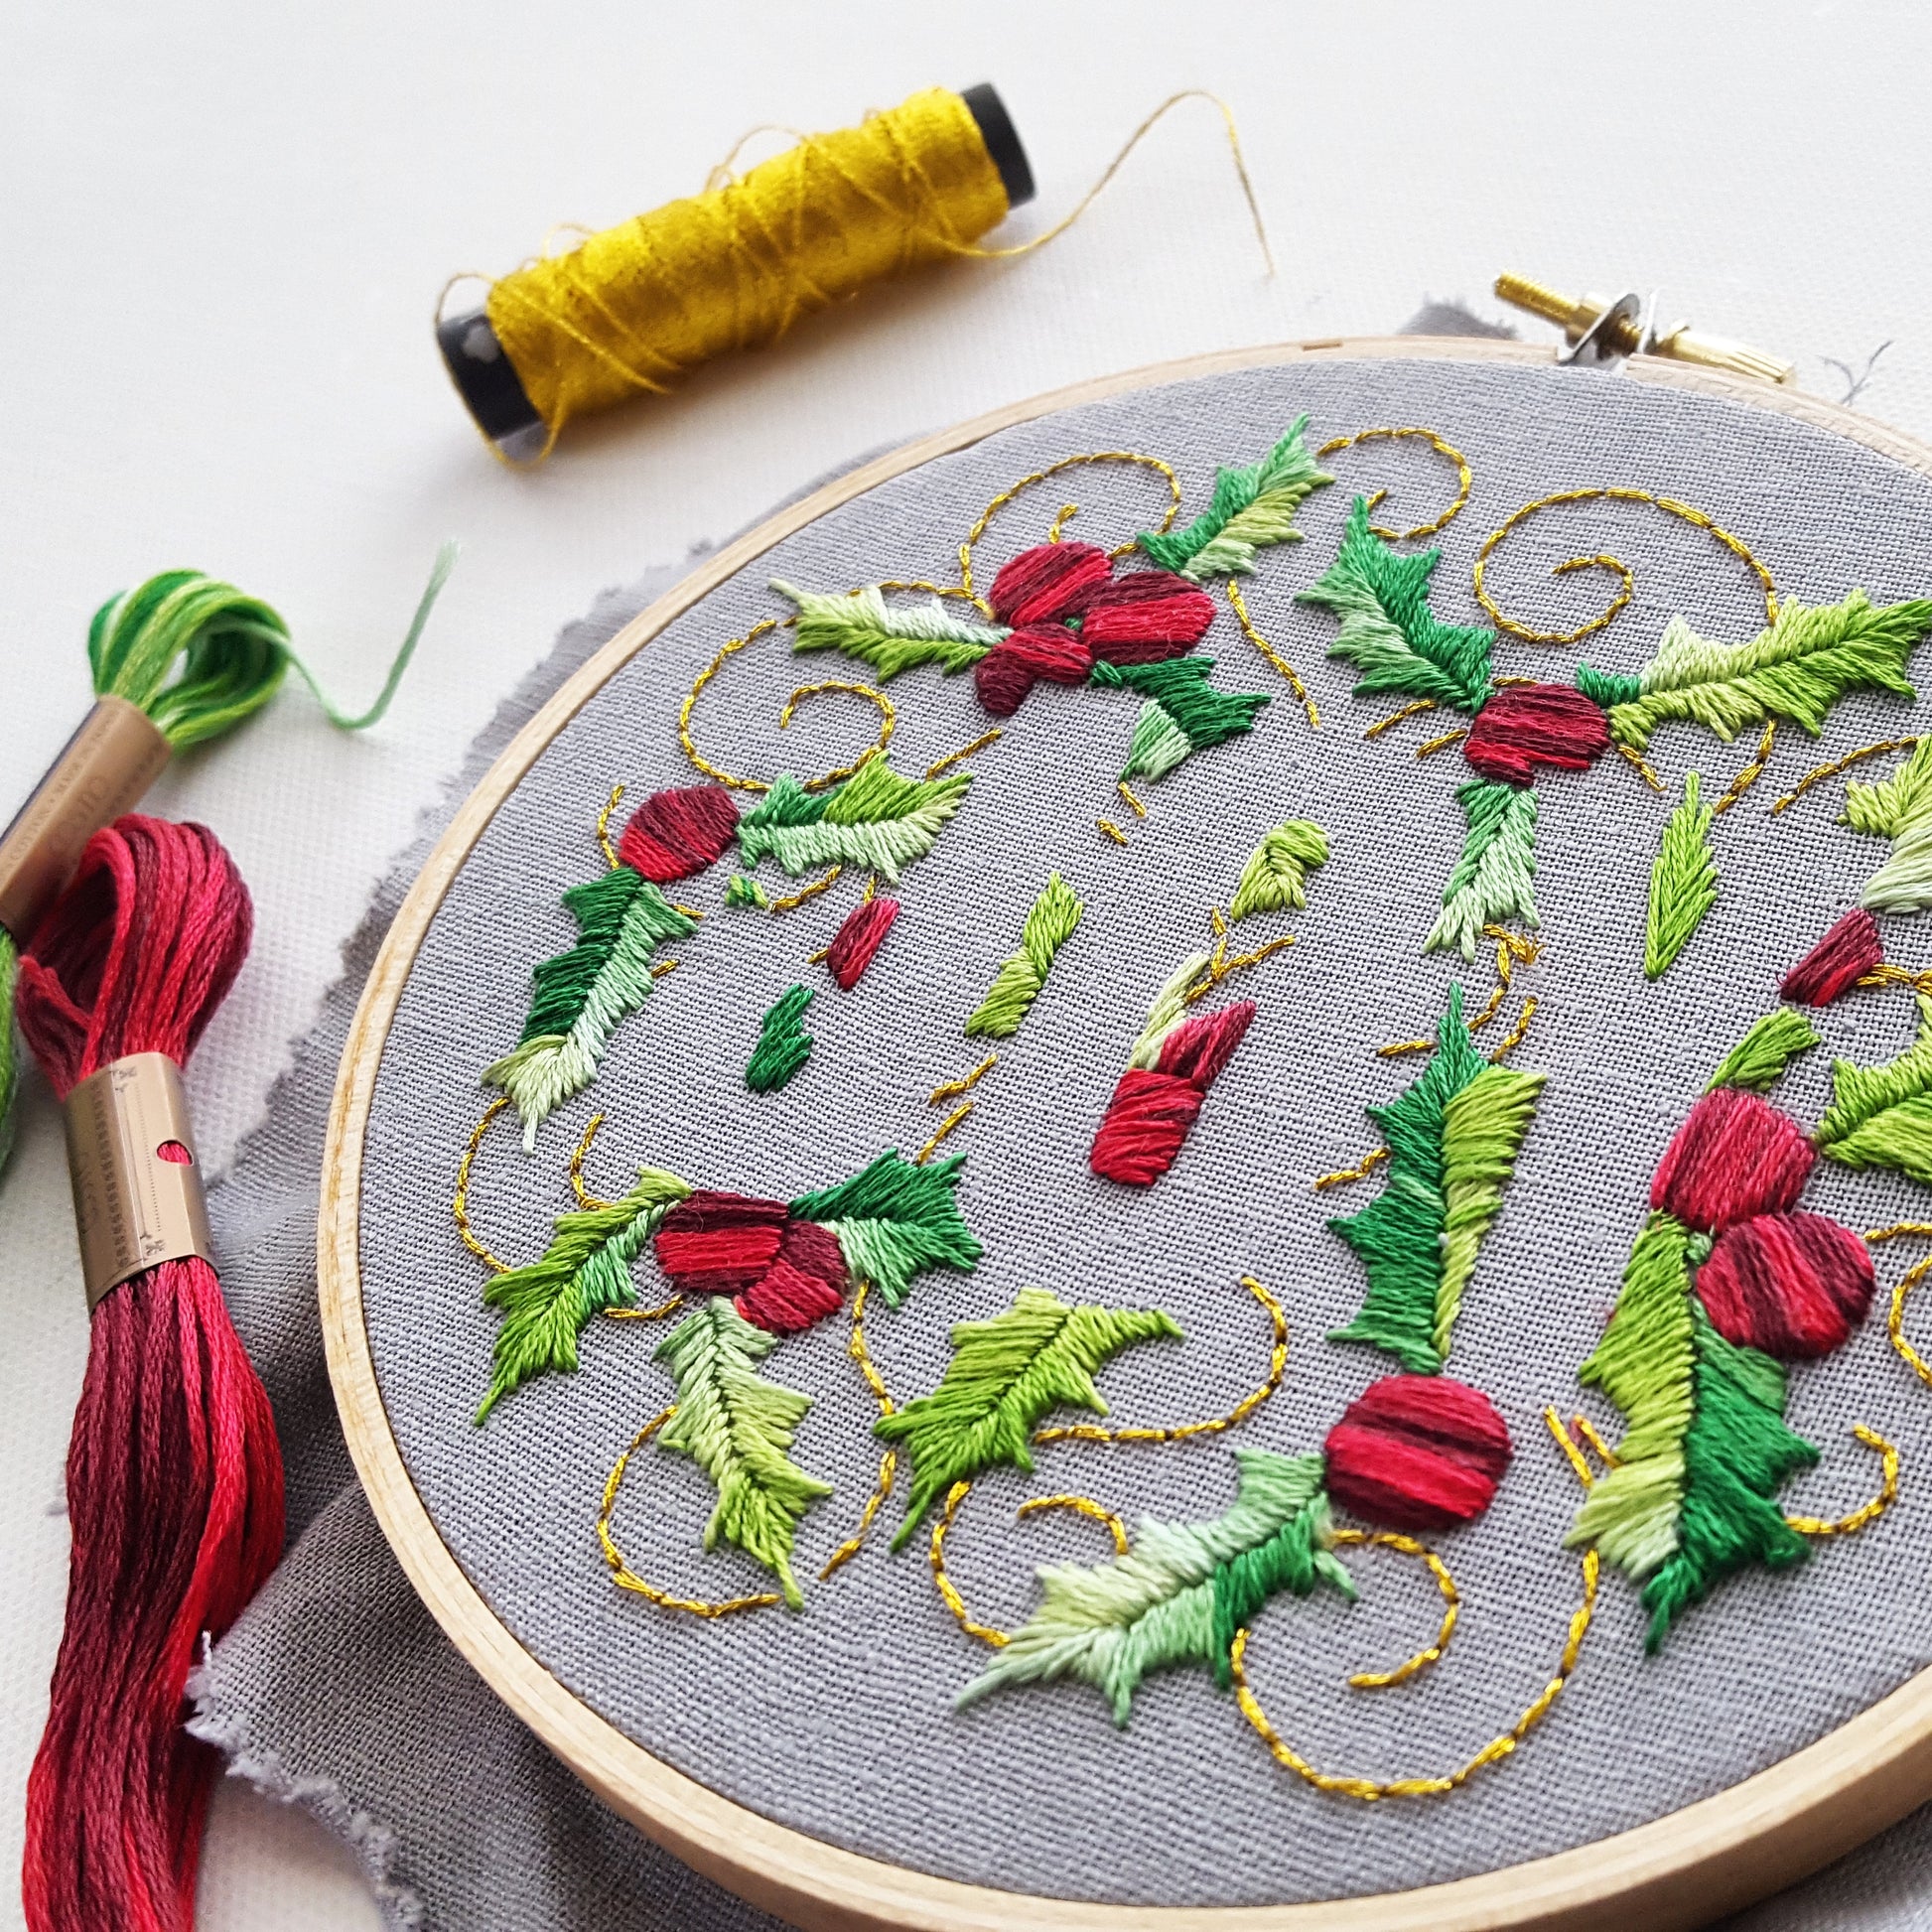 Joy's hand embroidery